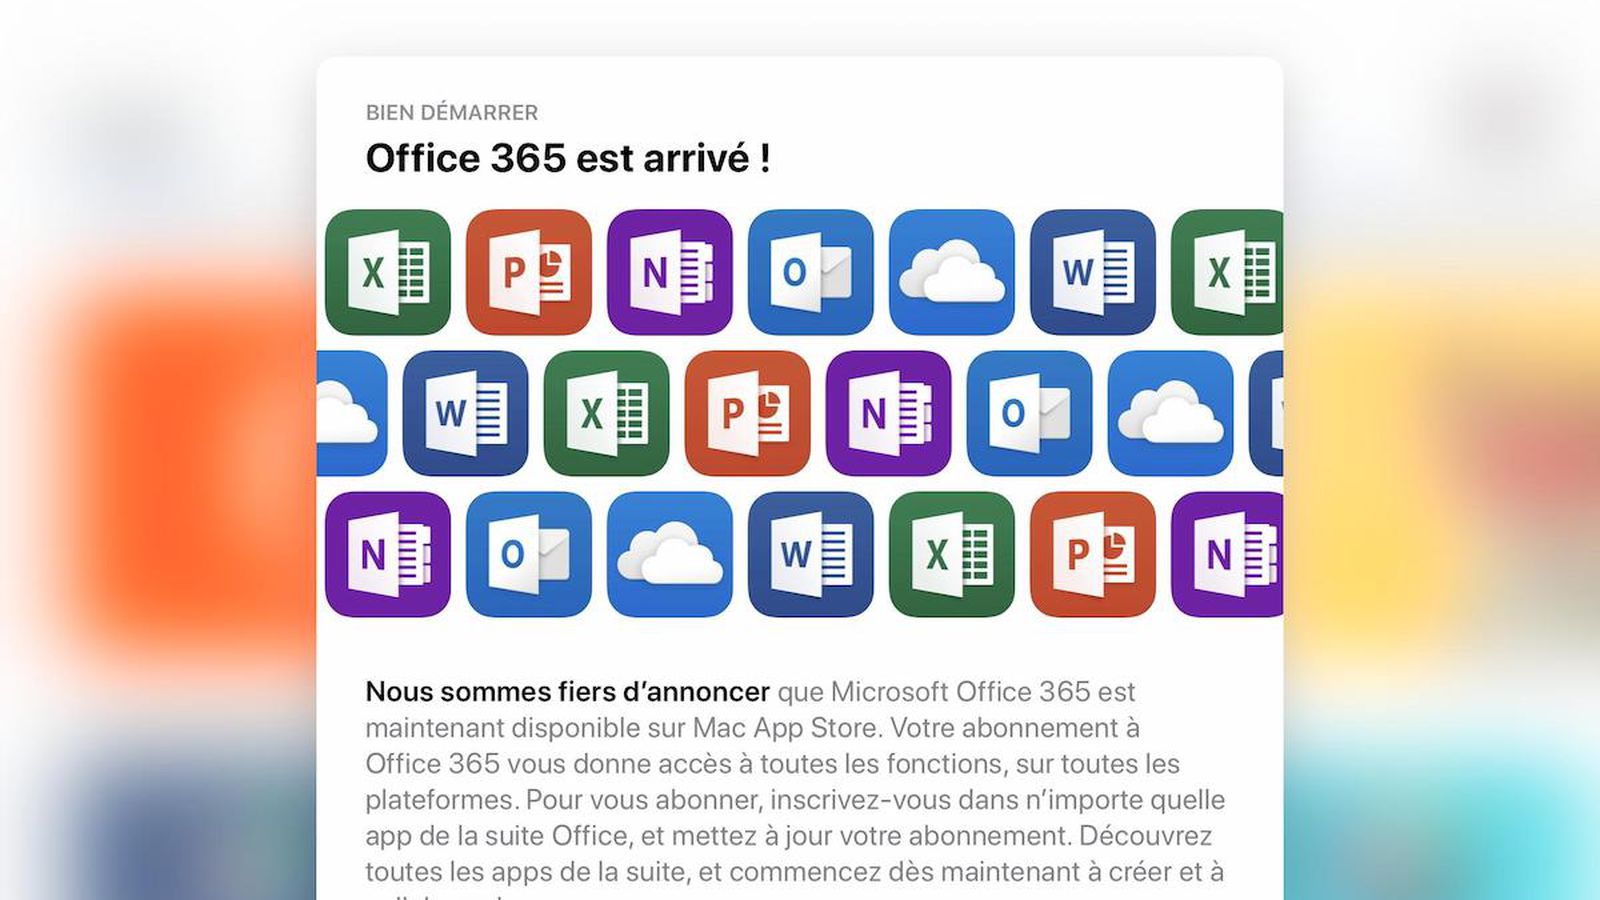 office 365 calendar app for mac